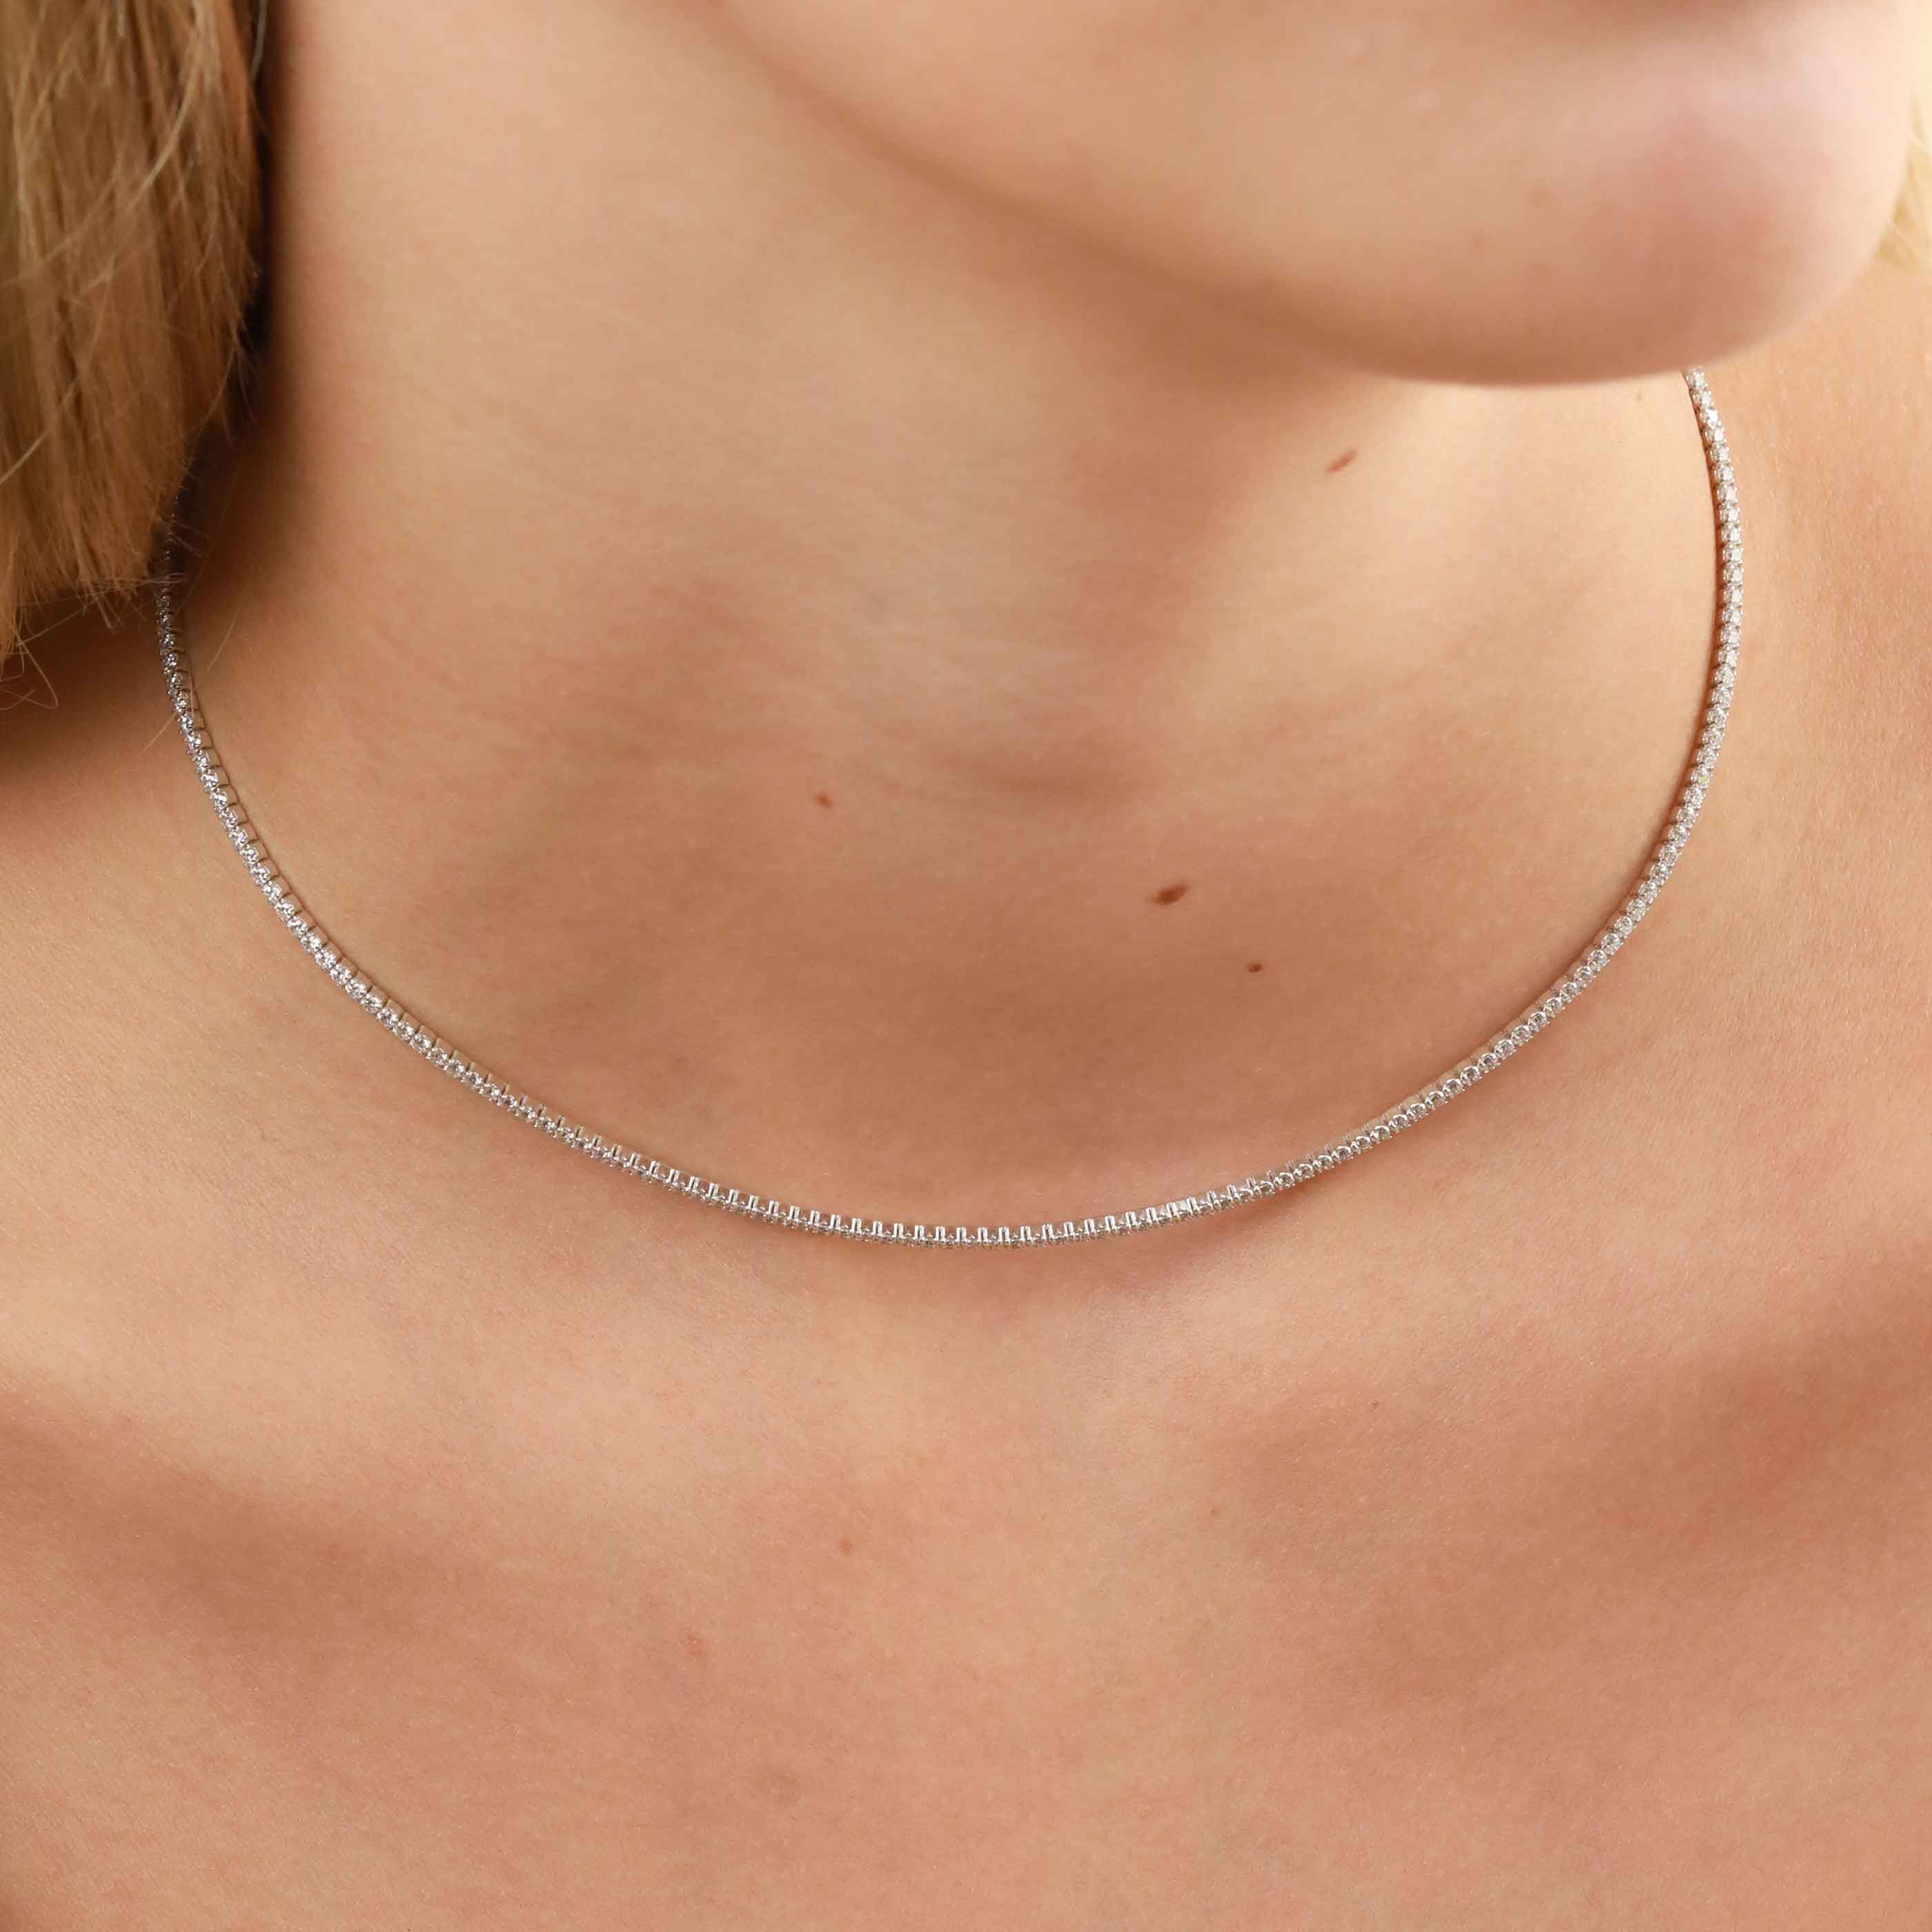 Tennis Chain Necklace in Silver worn